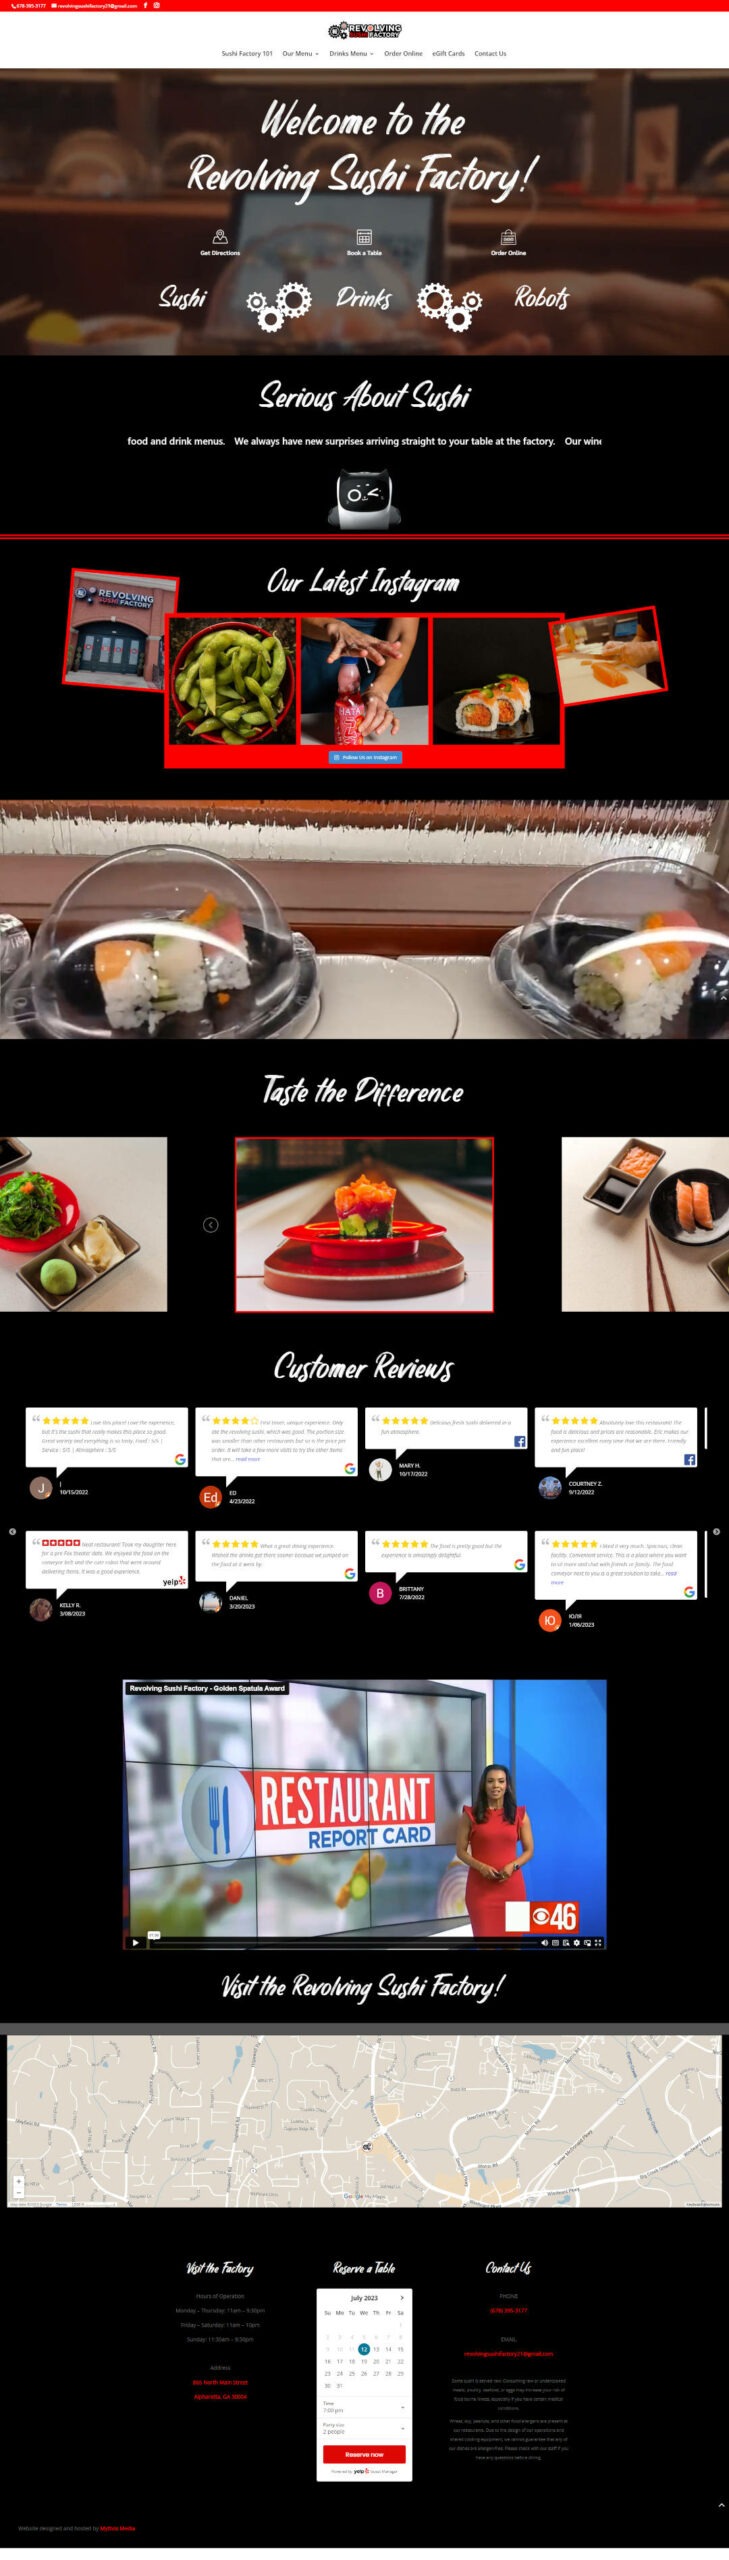 Mythos Media Business Websites - Revolving Sushi Factory in Alpharetta Georgia, website homepage